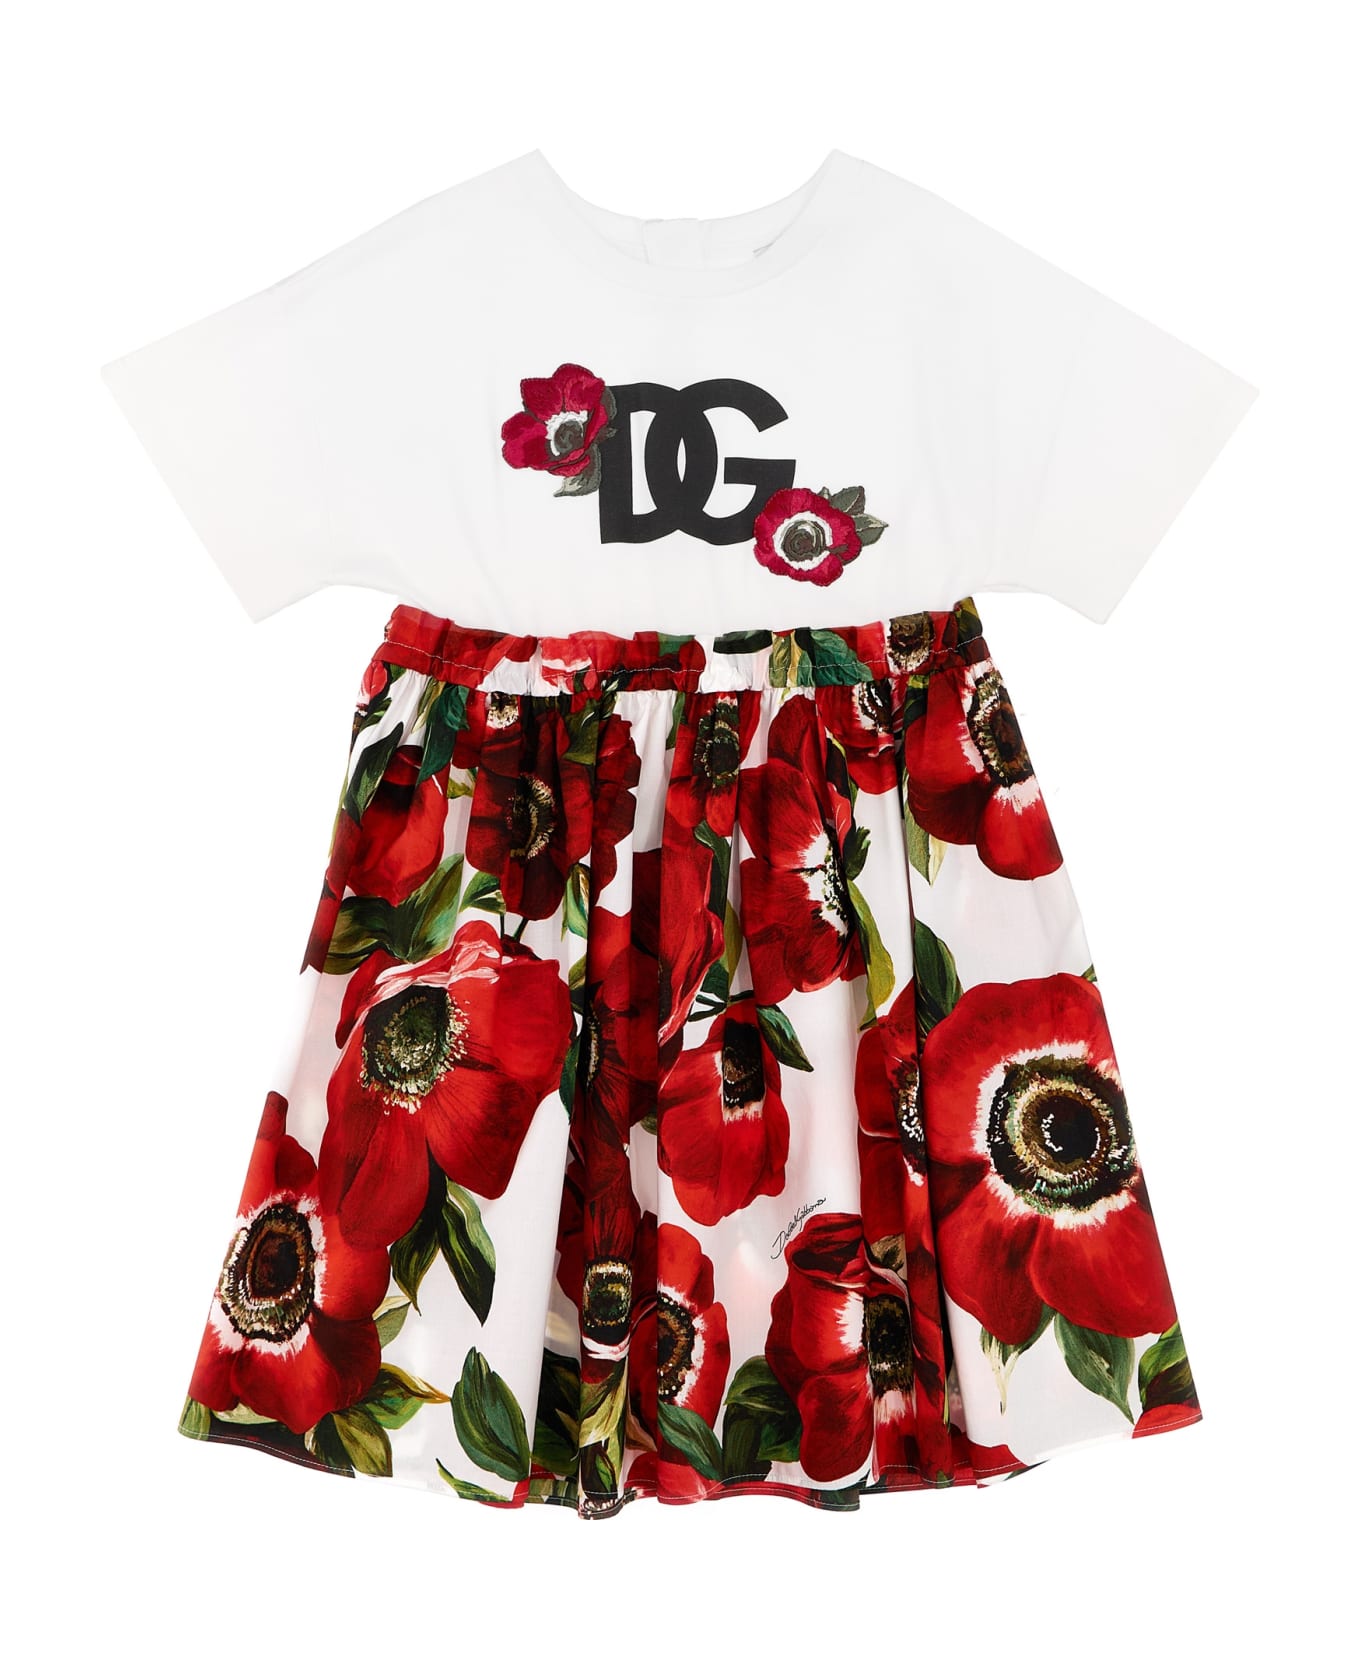 dolce gabbana crown logo silk tie item Poppy Print Dress - Multicolor